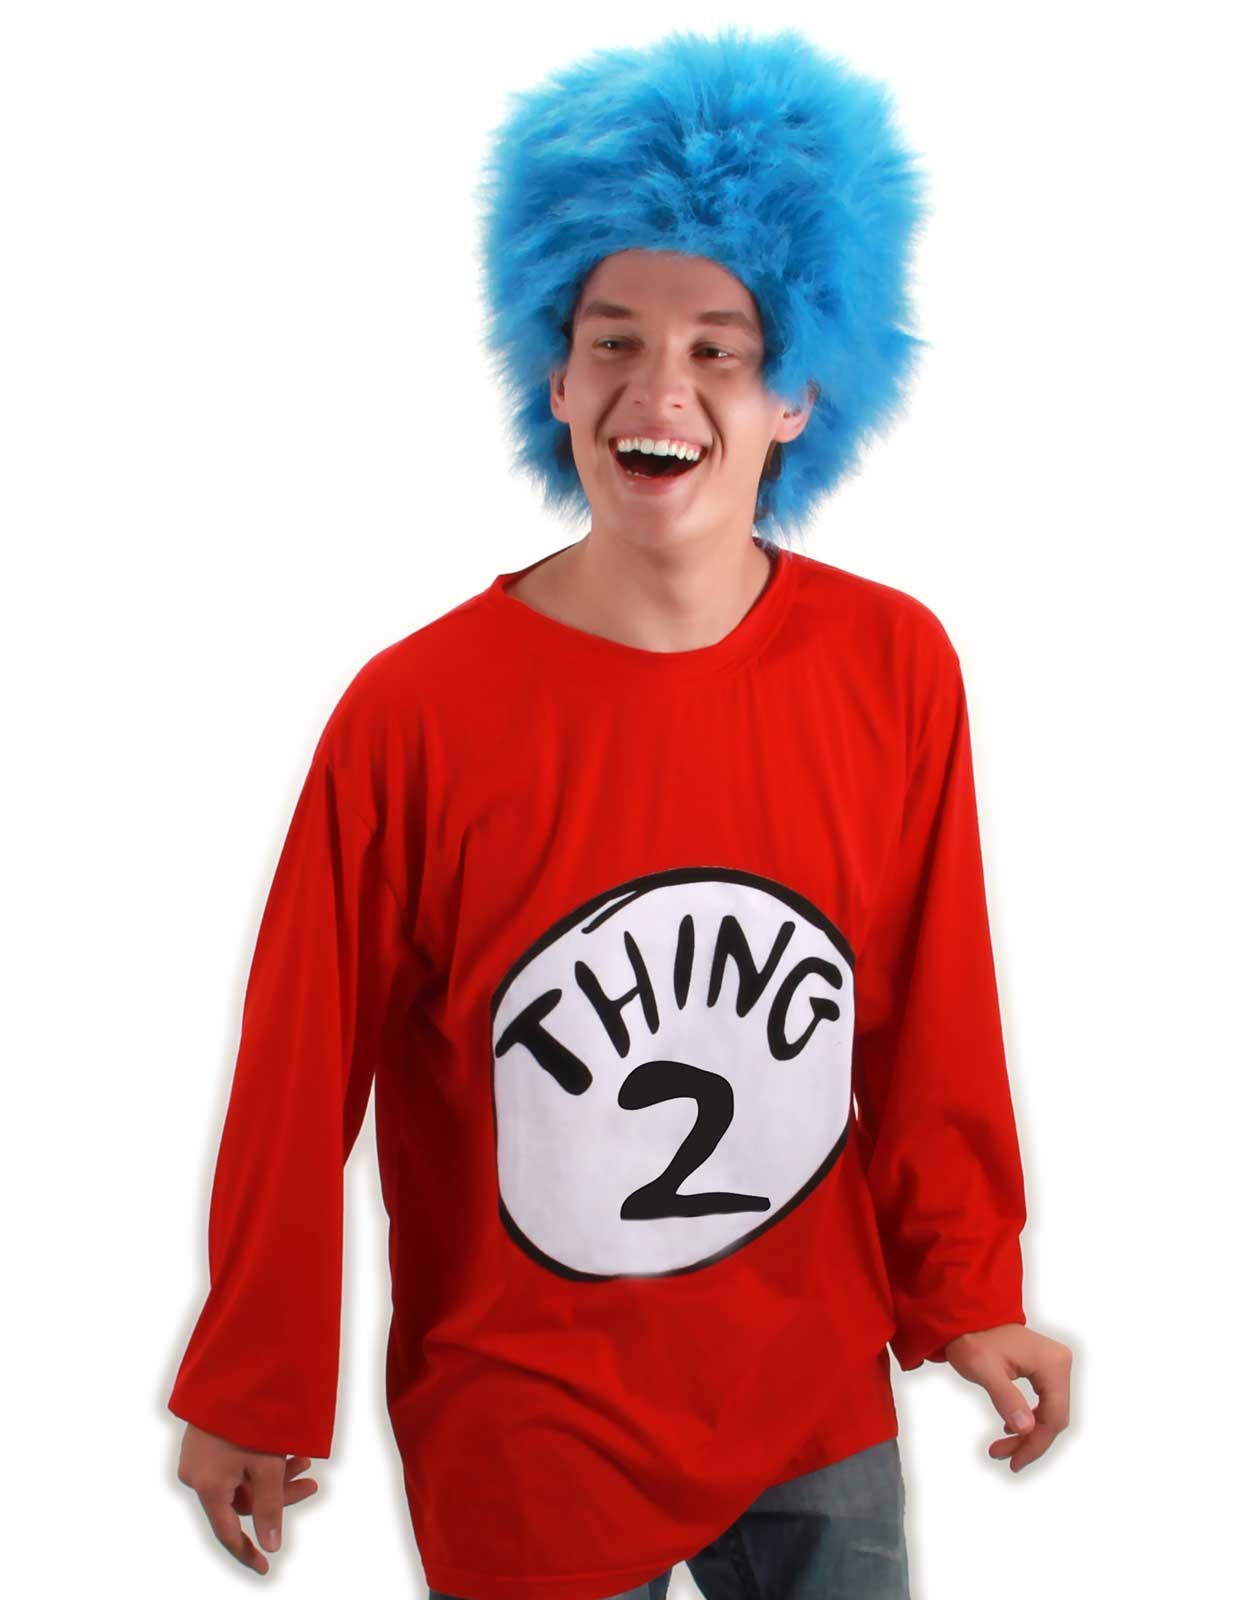 Dr. Seuss Thing 2 Adult Plus Costume Kit